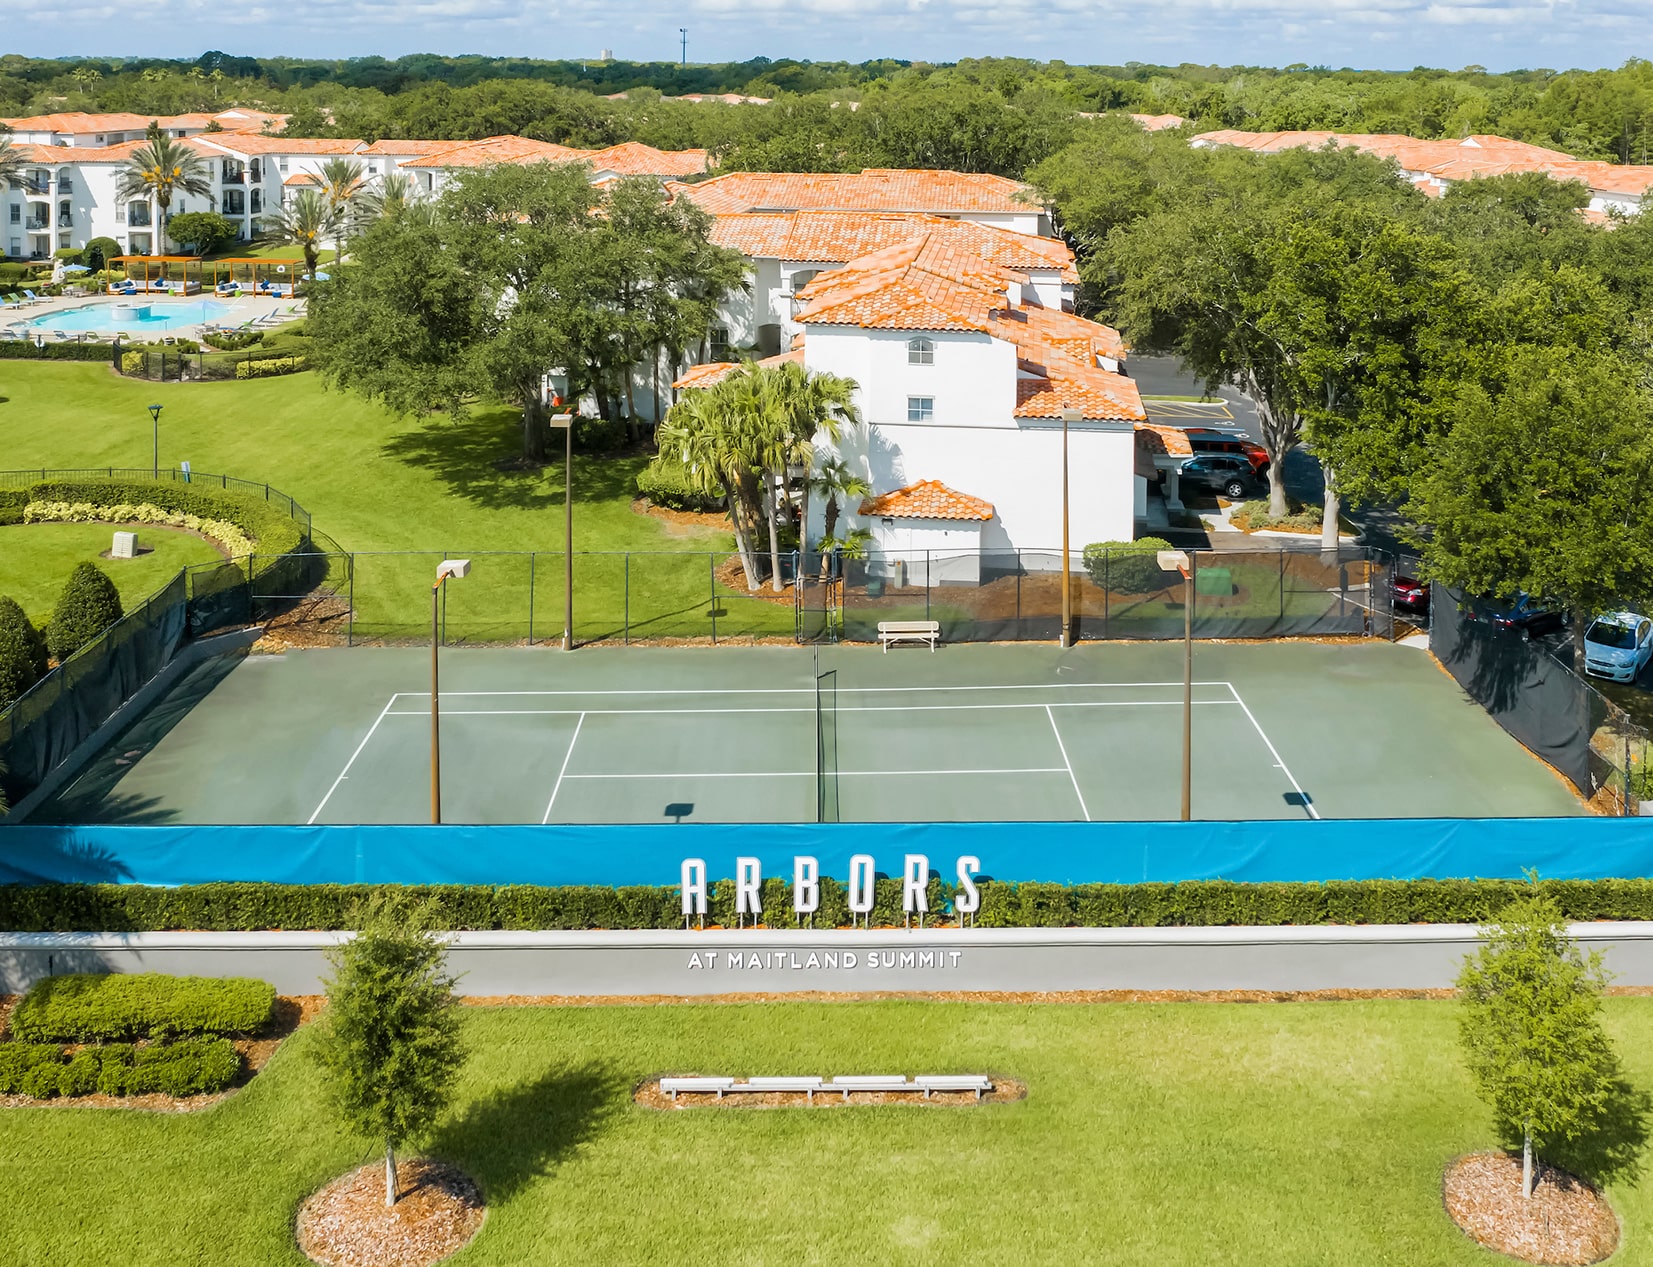 Arbors at Maitland Summit Tennis court aerial view